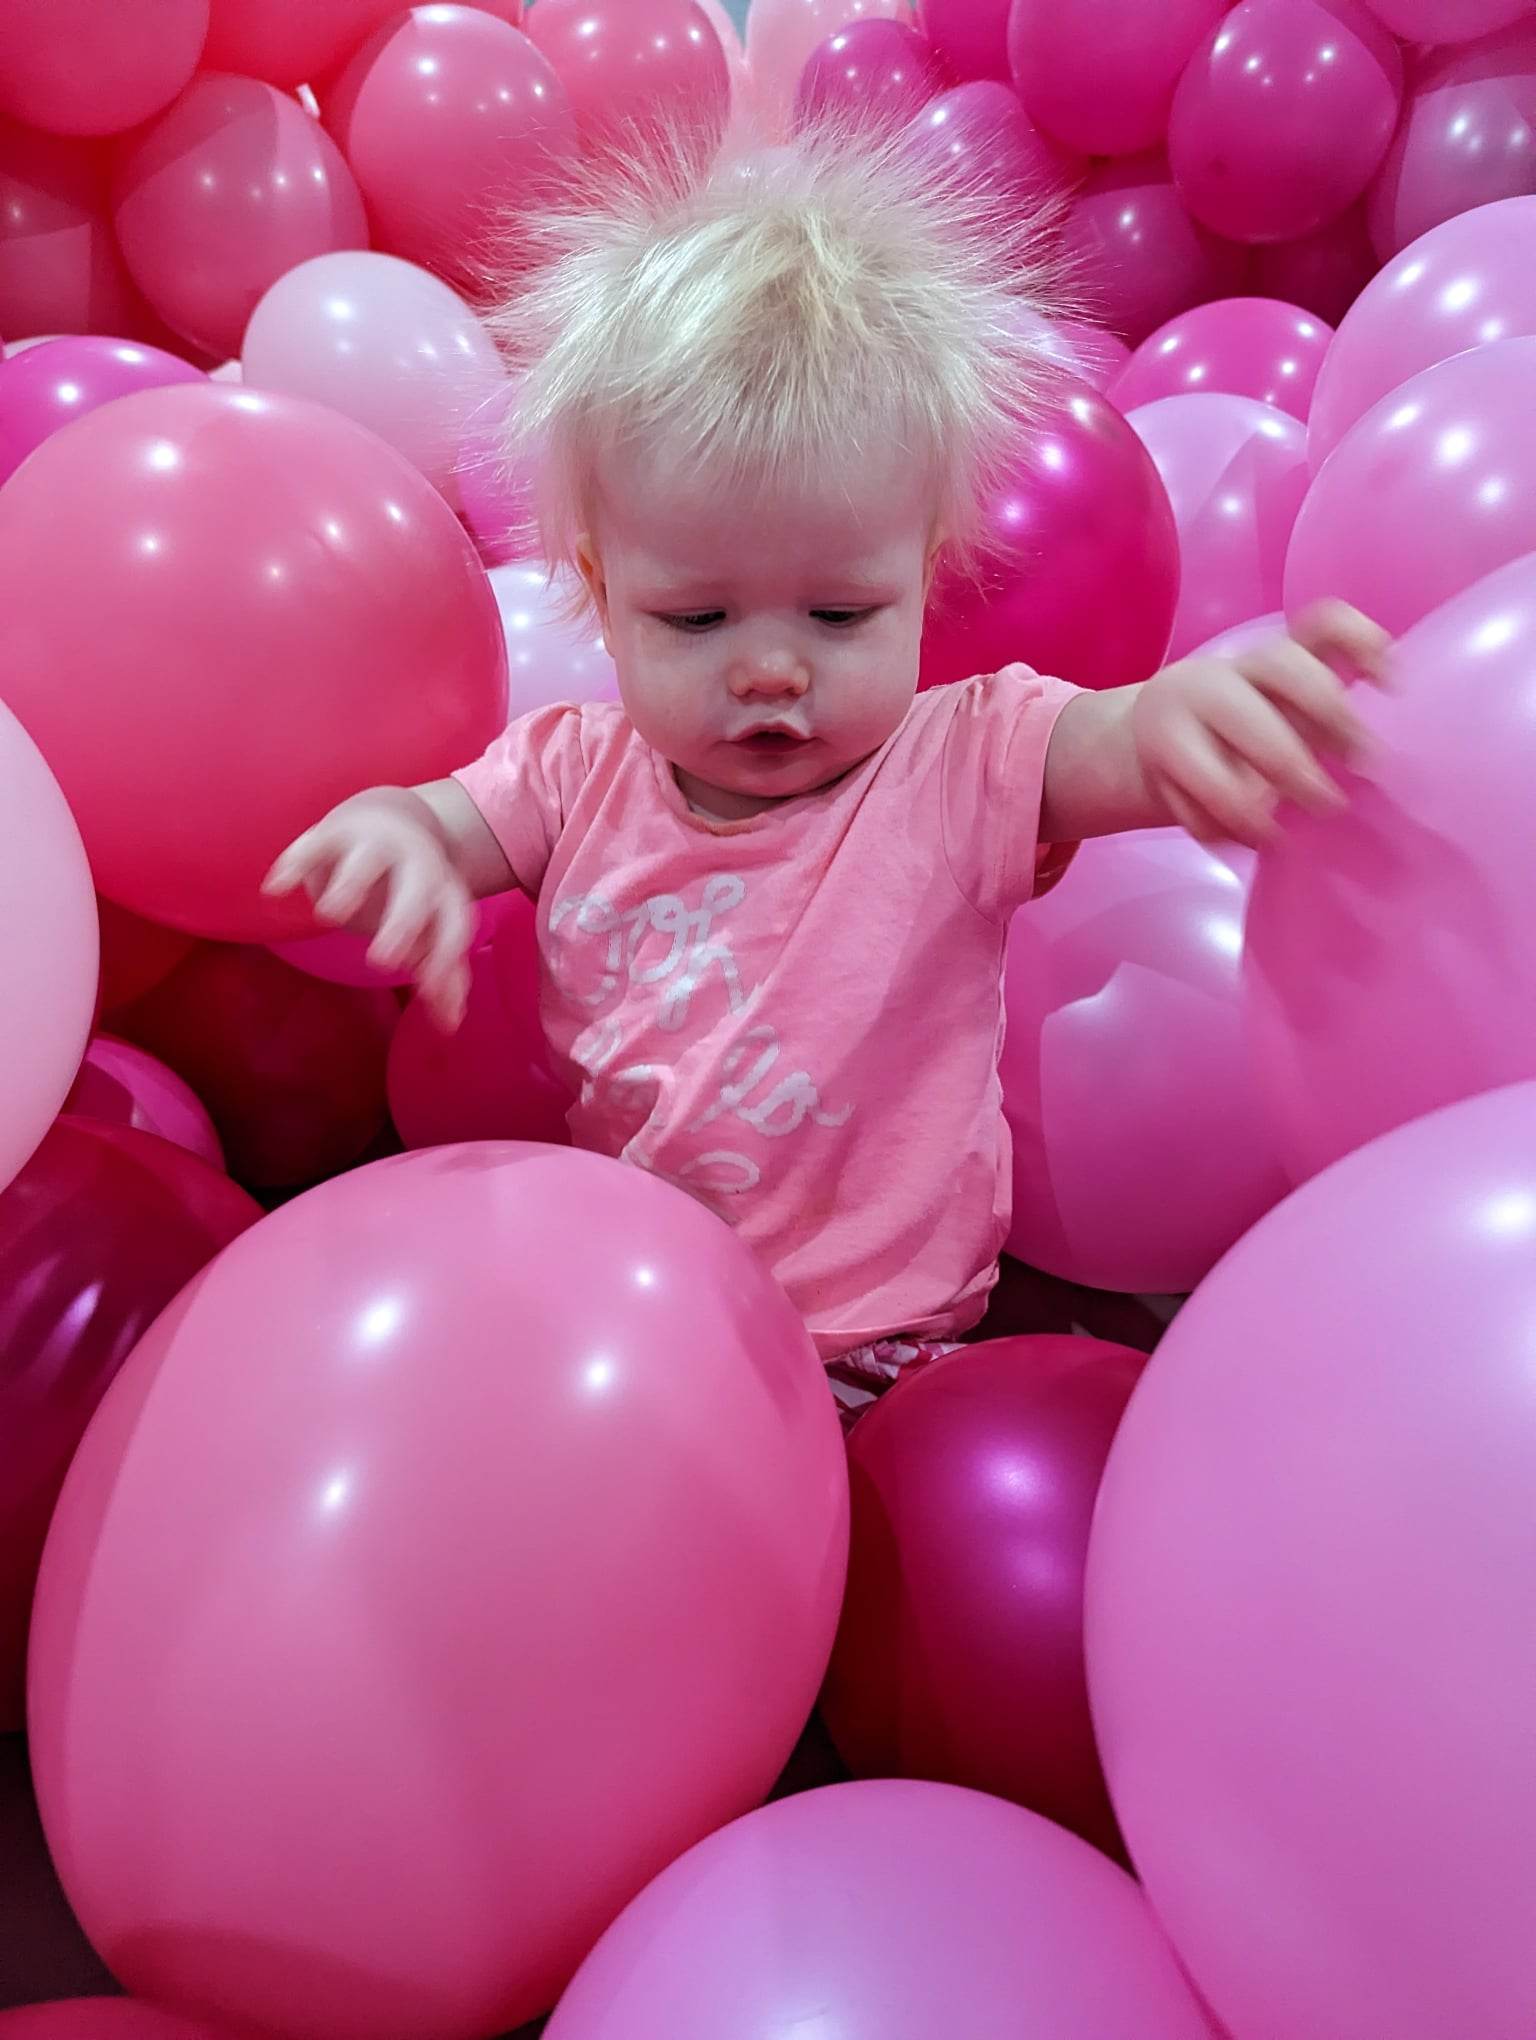 Birthday Girl fun pink balloons
ipswich events